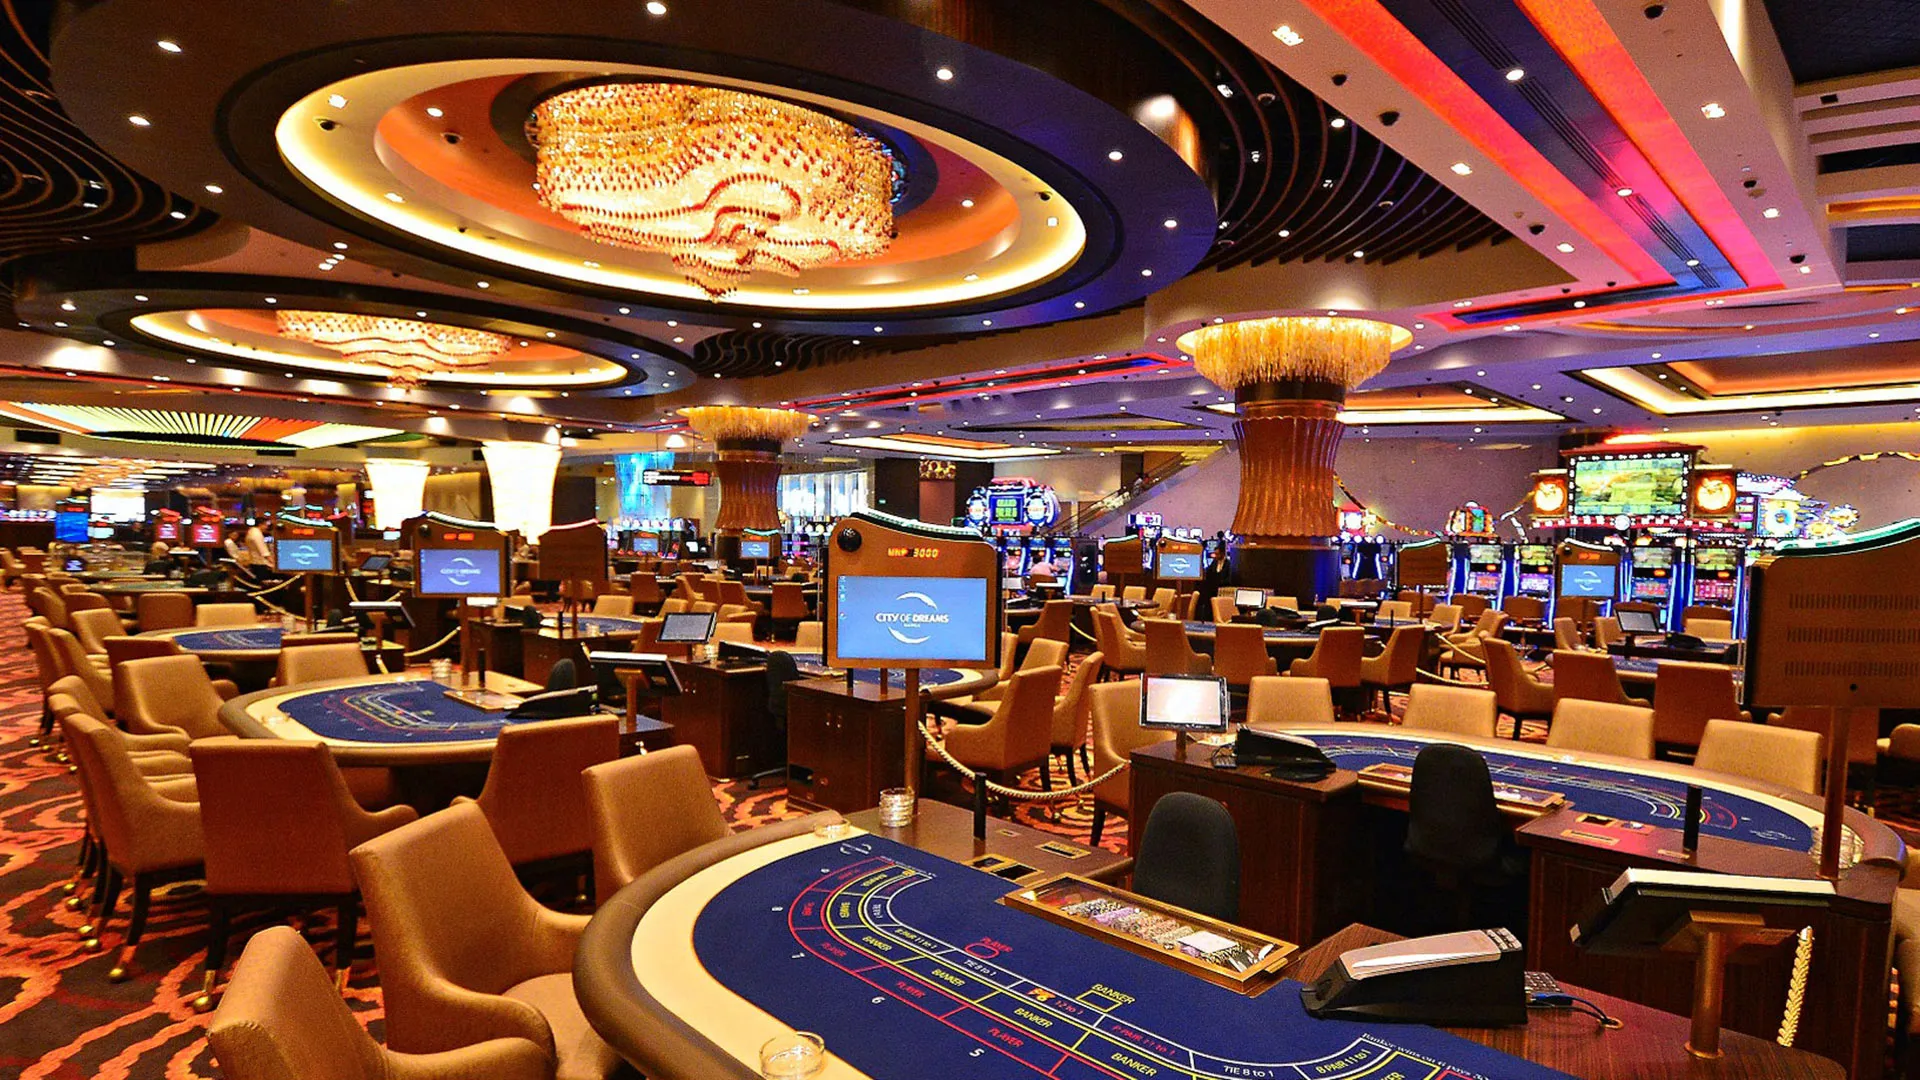 Winning Methods for Real Money Play in Online Casino Sites